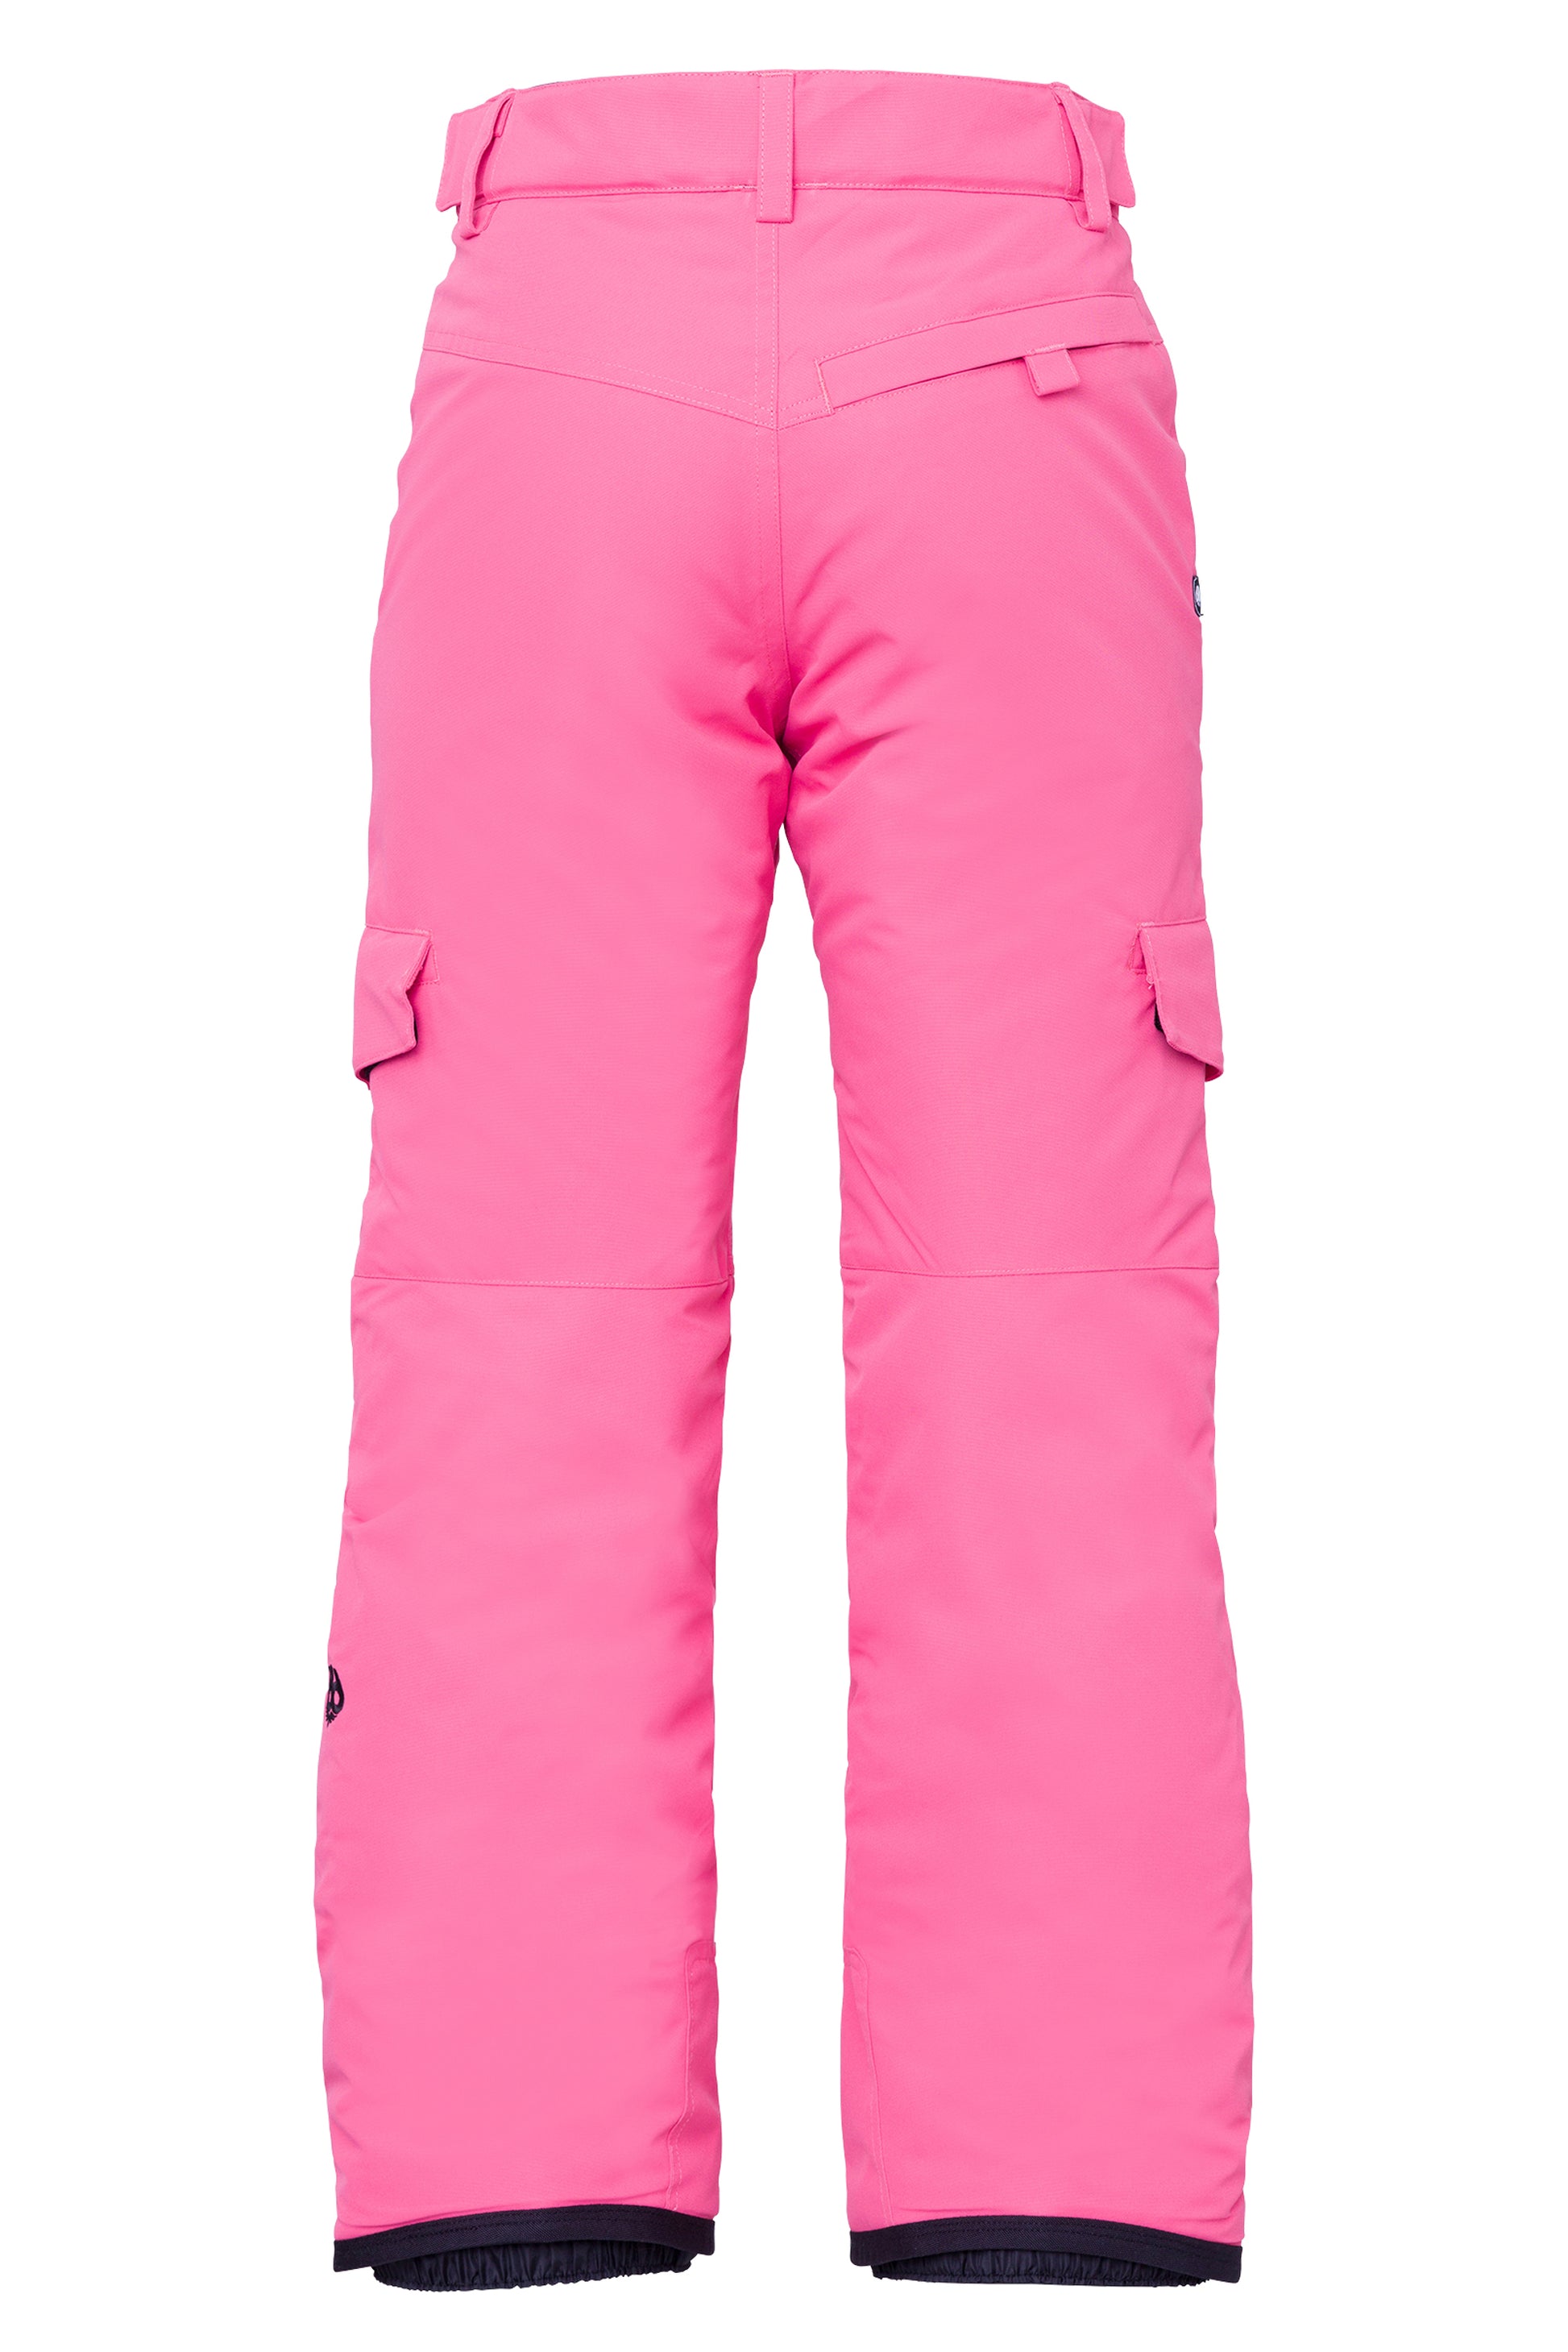 bright pink snow pants - girls'